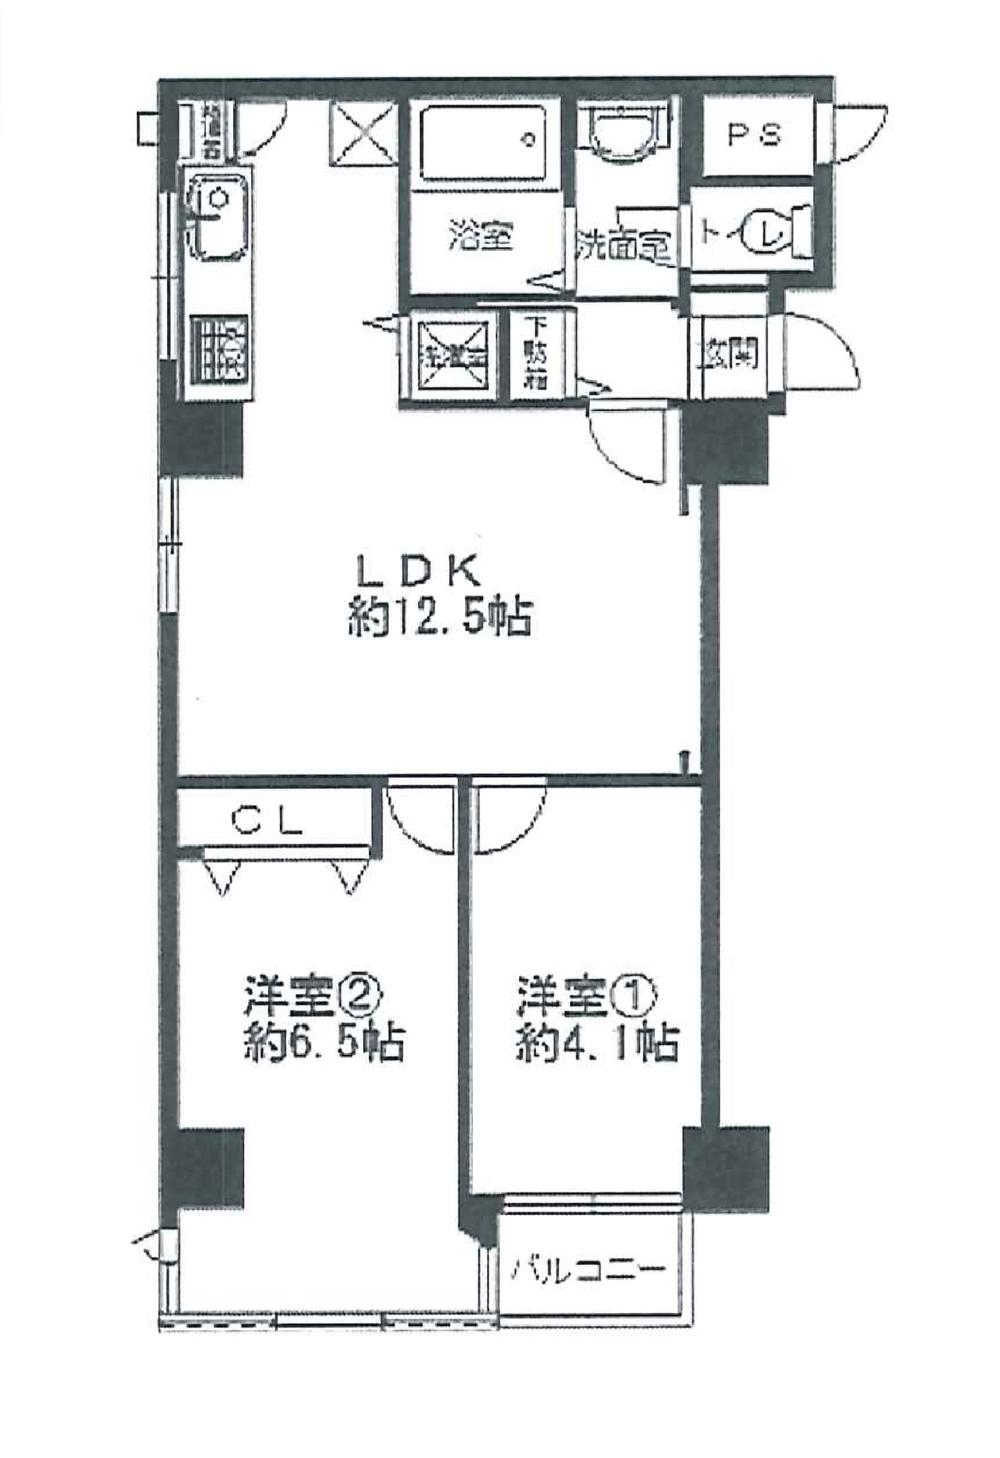 Floor plan. 2LDK, Price 13.8 million yen, Occupied area 56.89 sq m , 2LDK type of balcony area 5.28 sq m spacious floor plan!